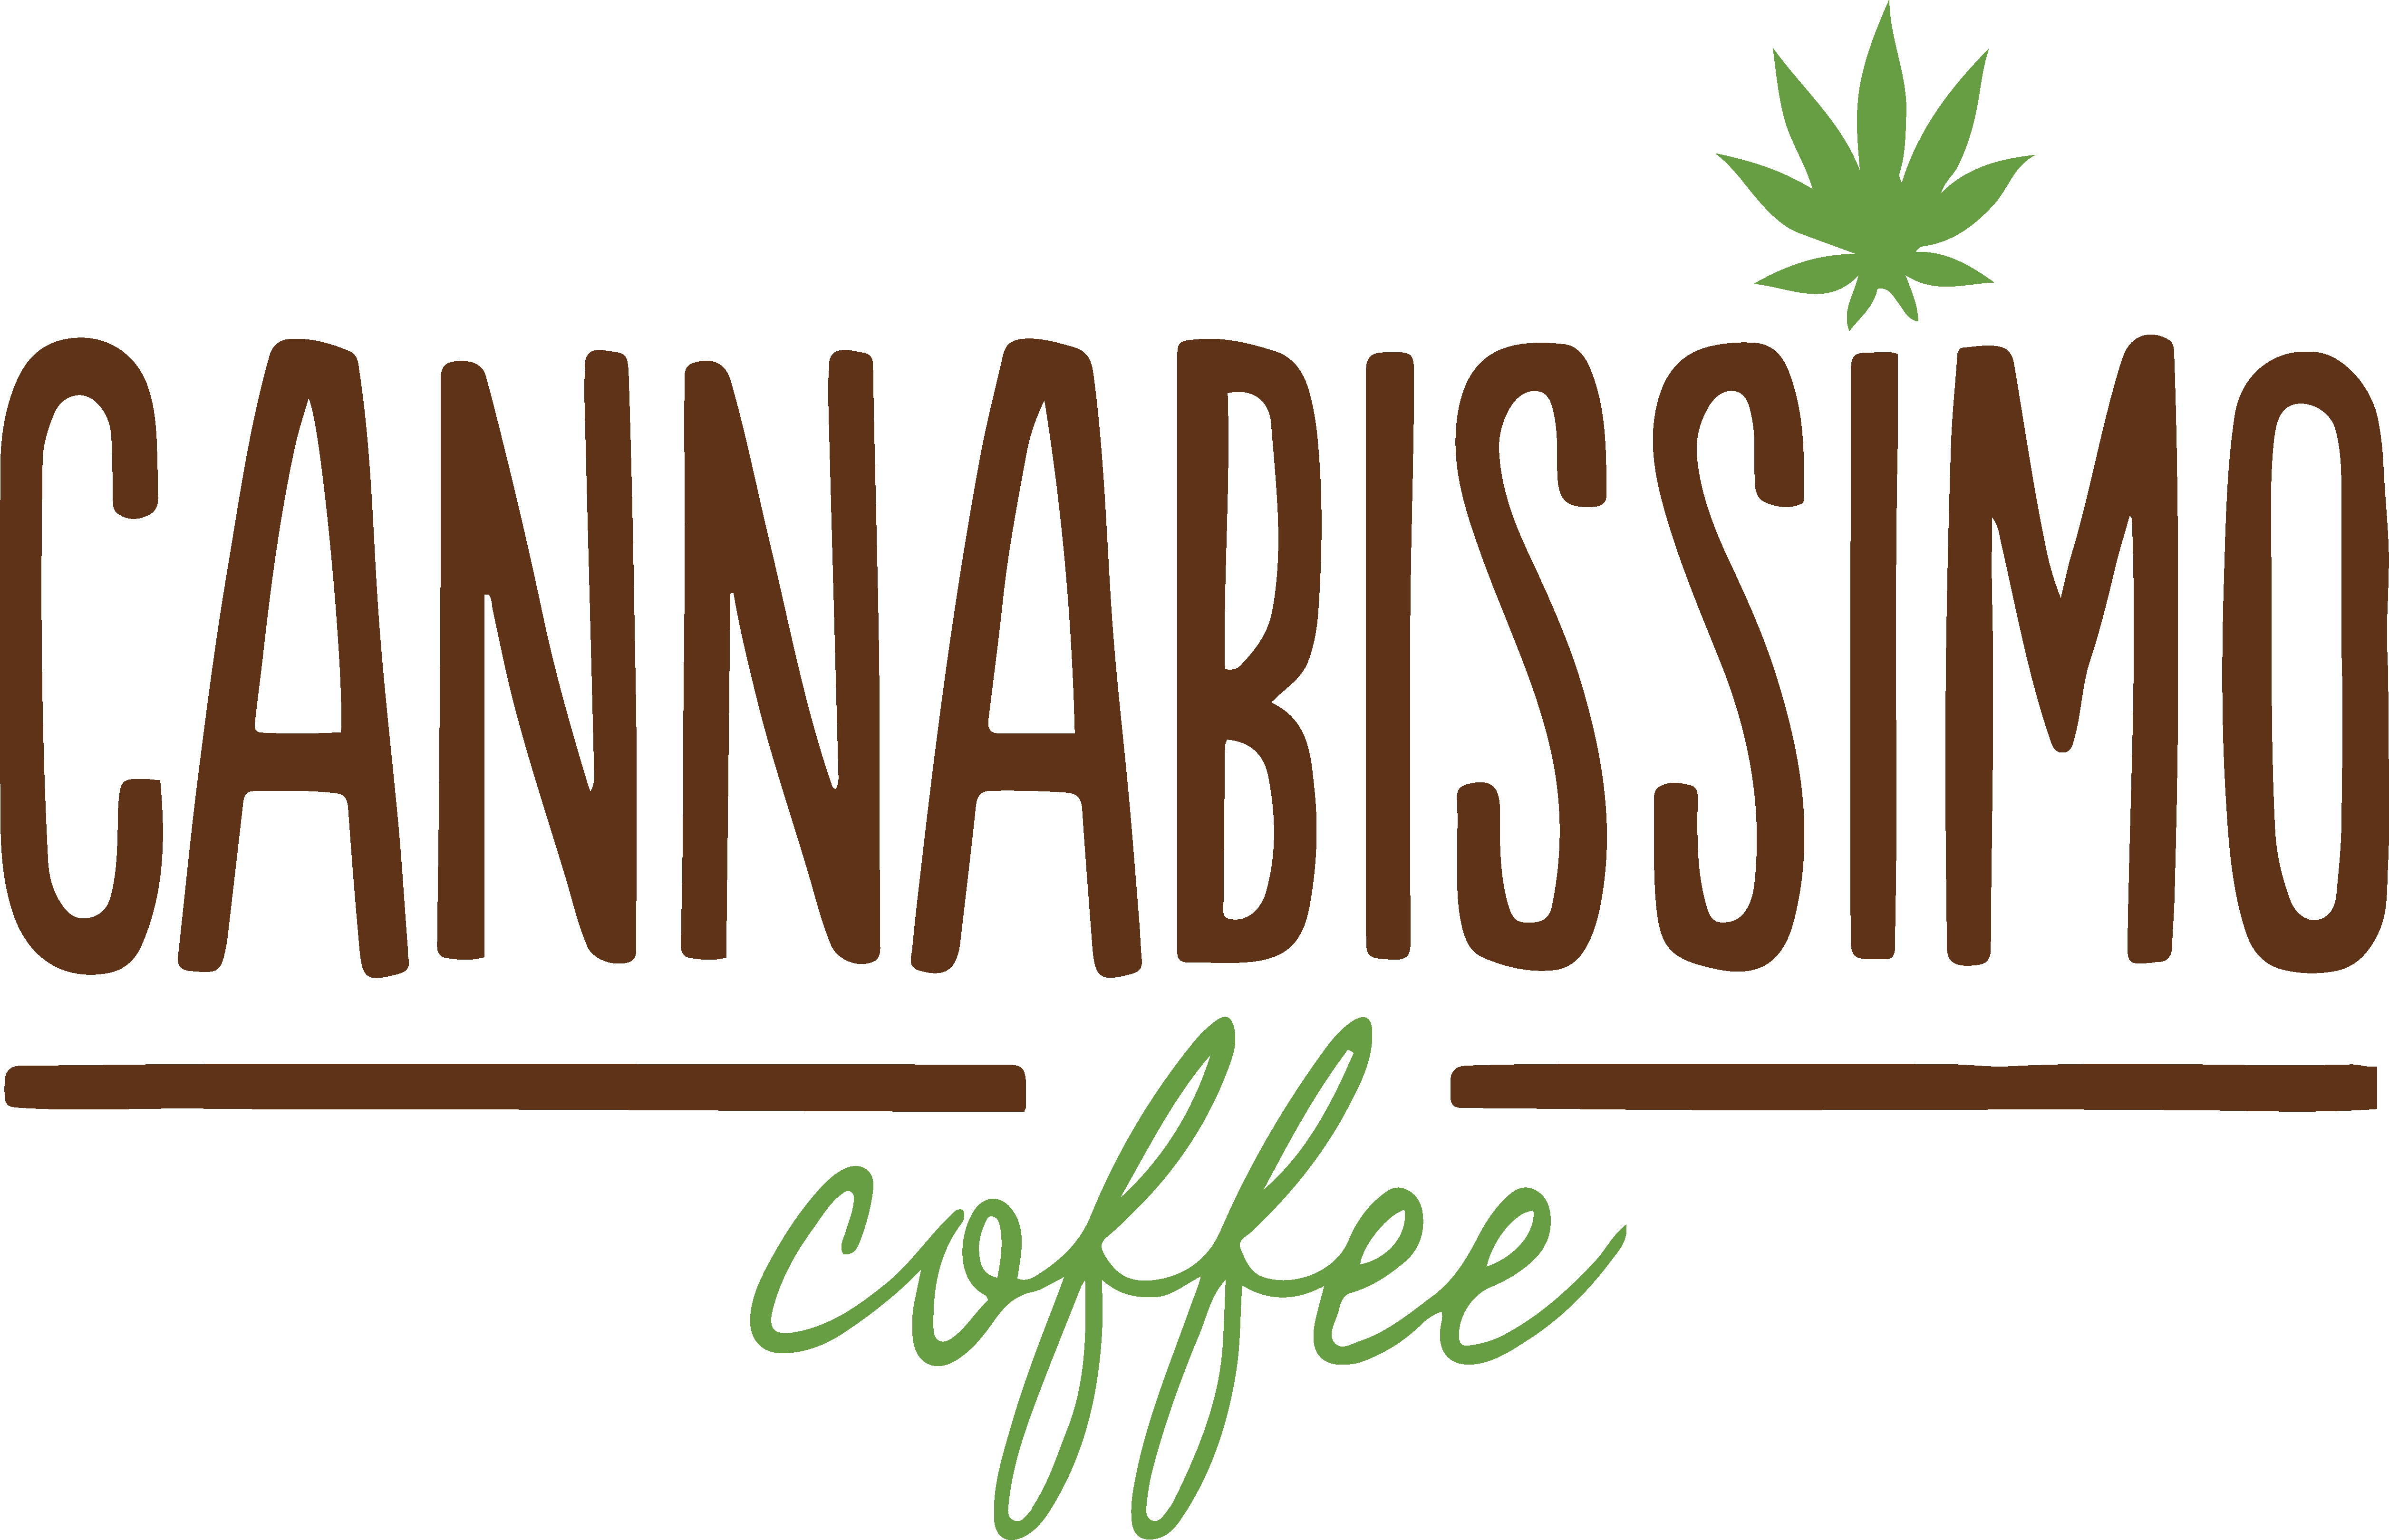 Cannabissimo logo